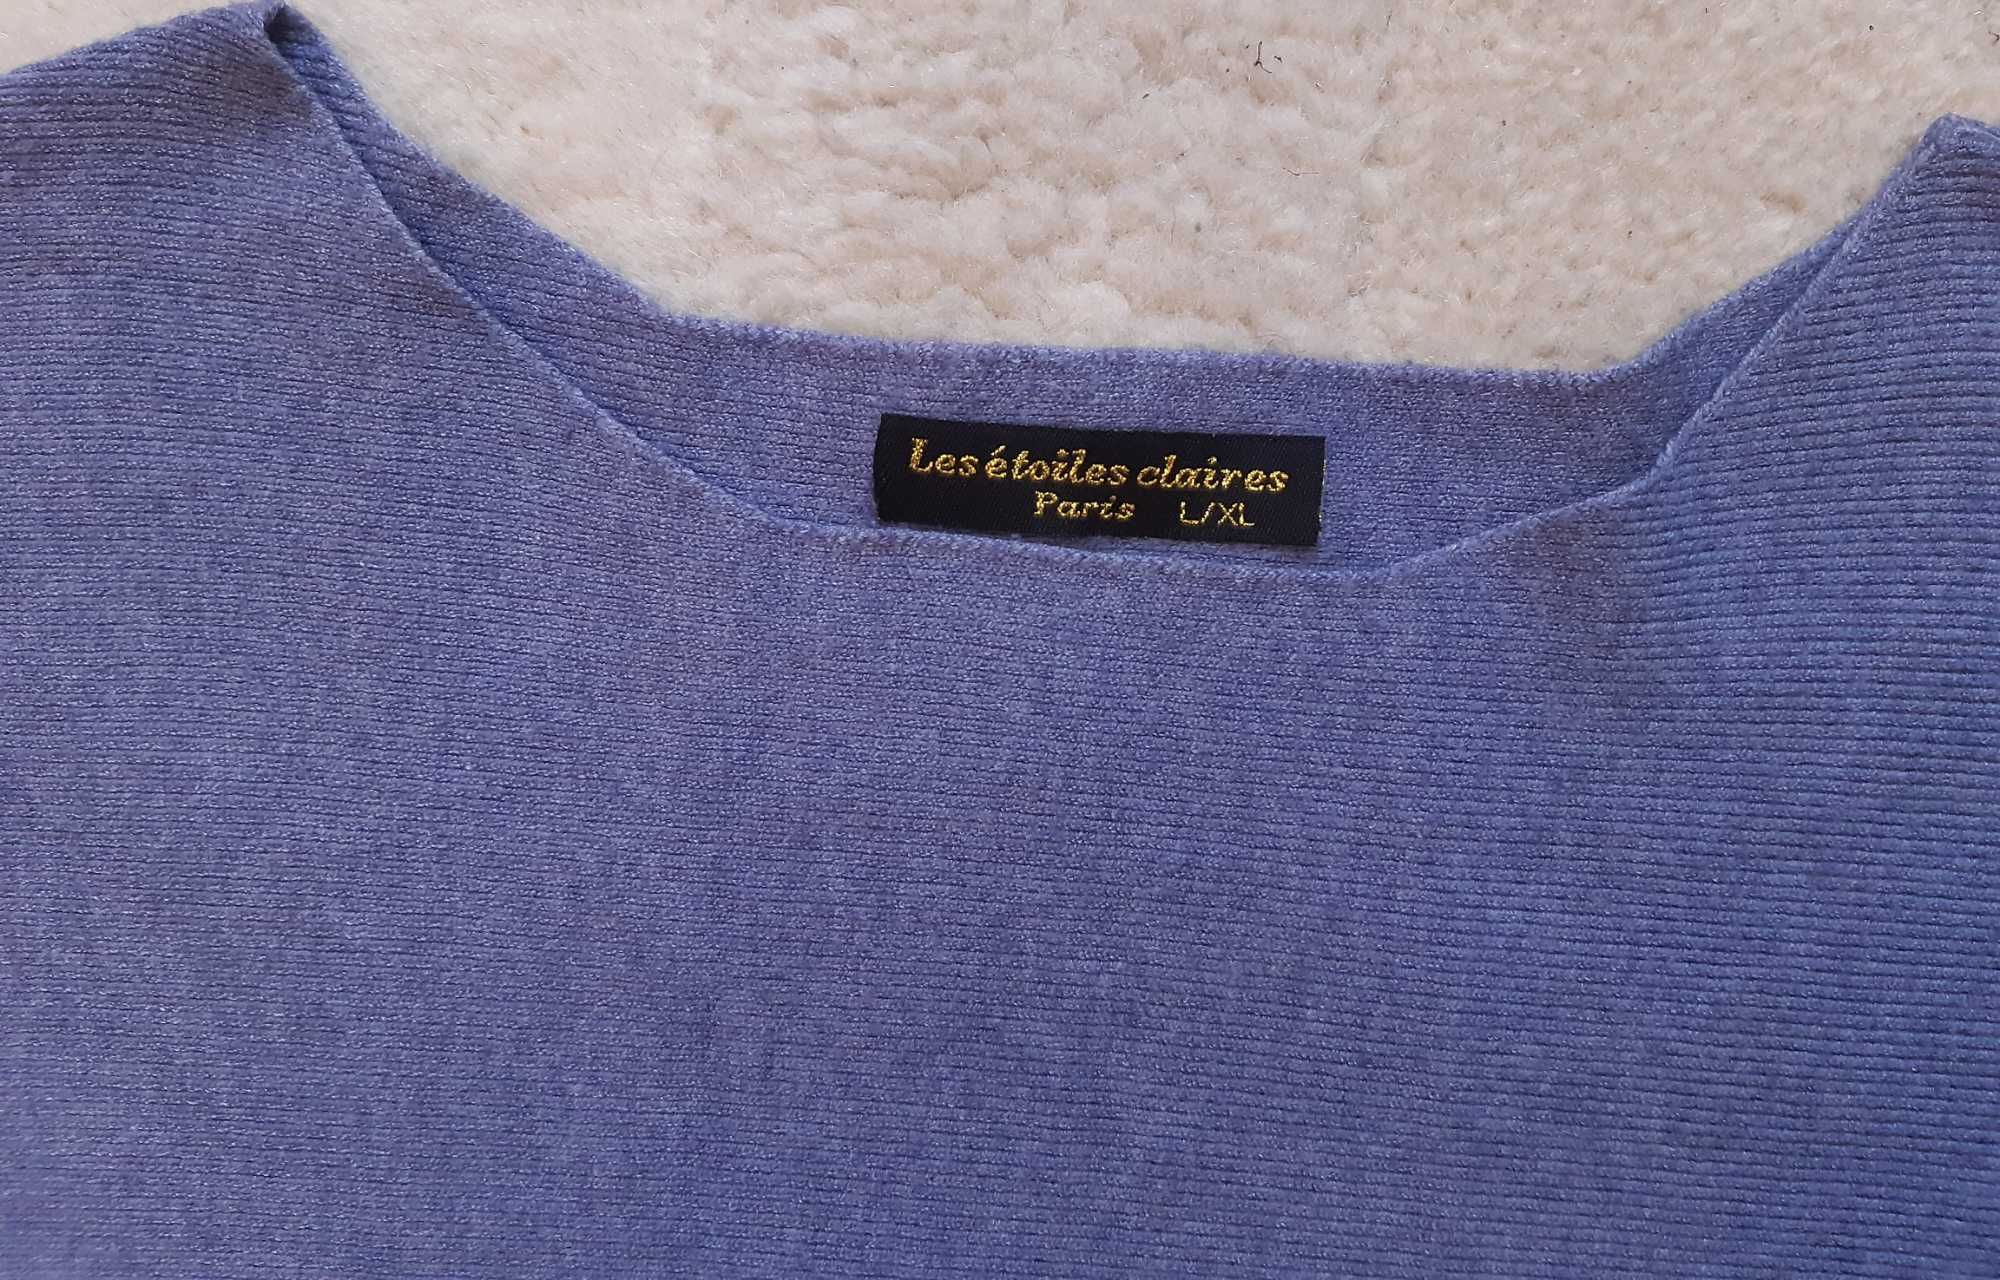 Francuski błękitny wełniany sweterek Les etoiles claires Paris